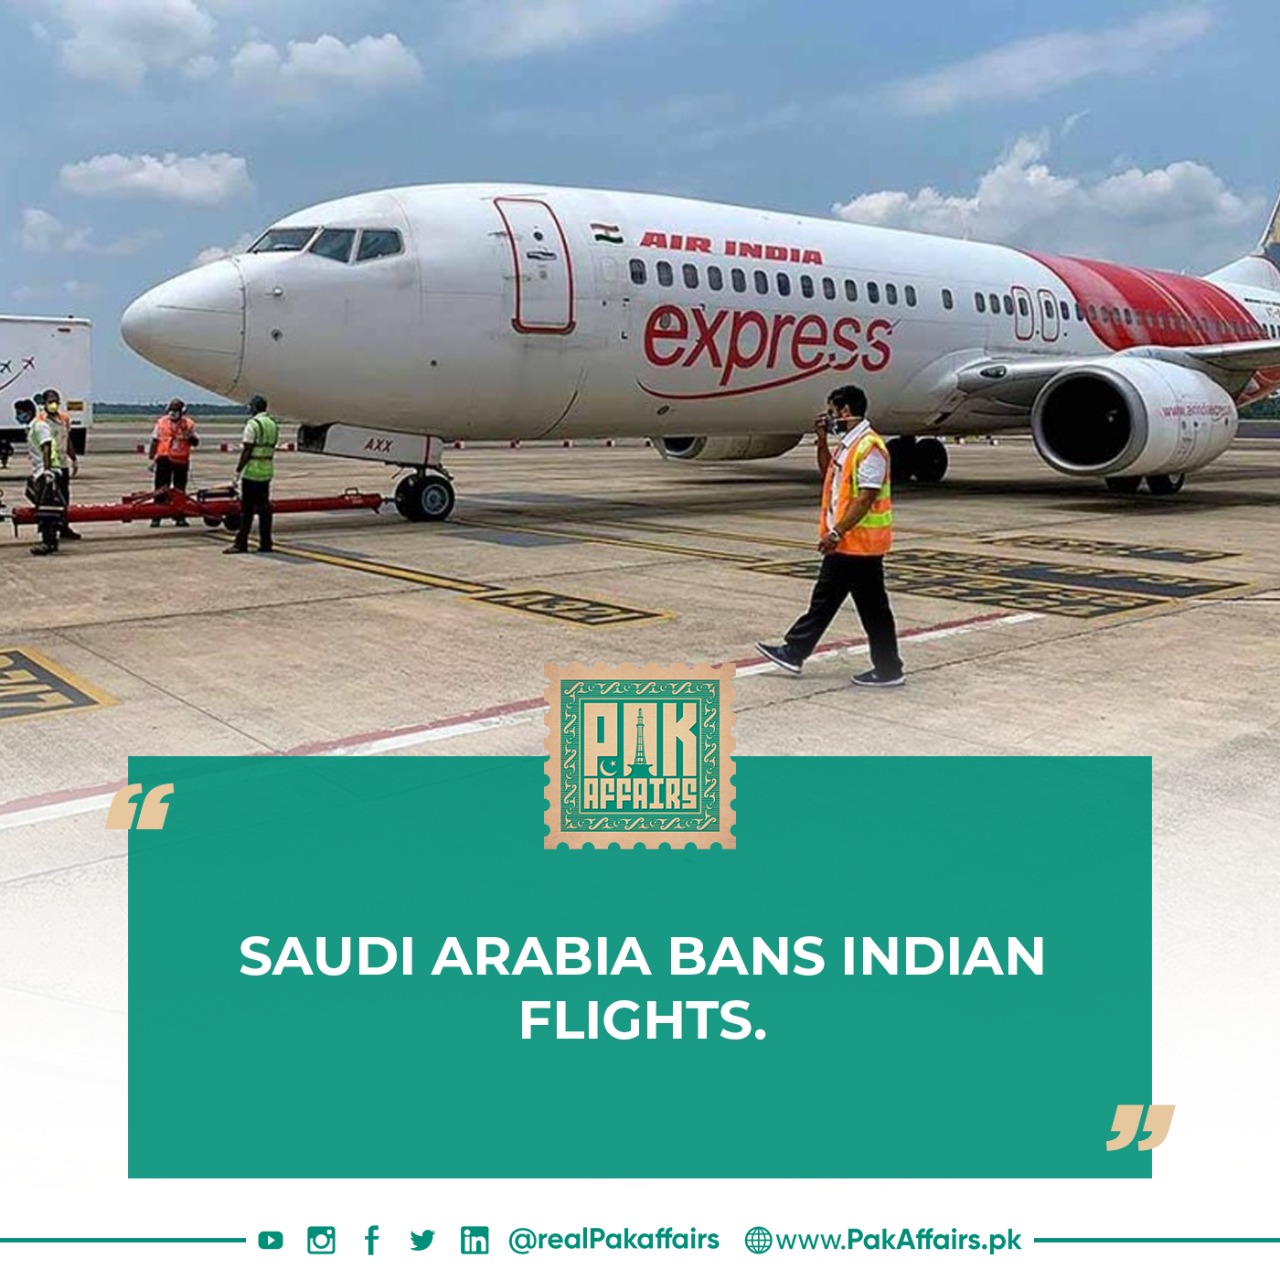 Saudi Arabia bans Indian flights